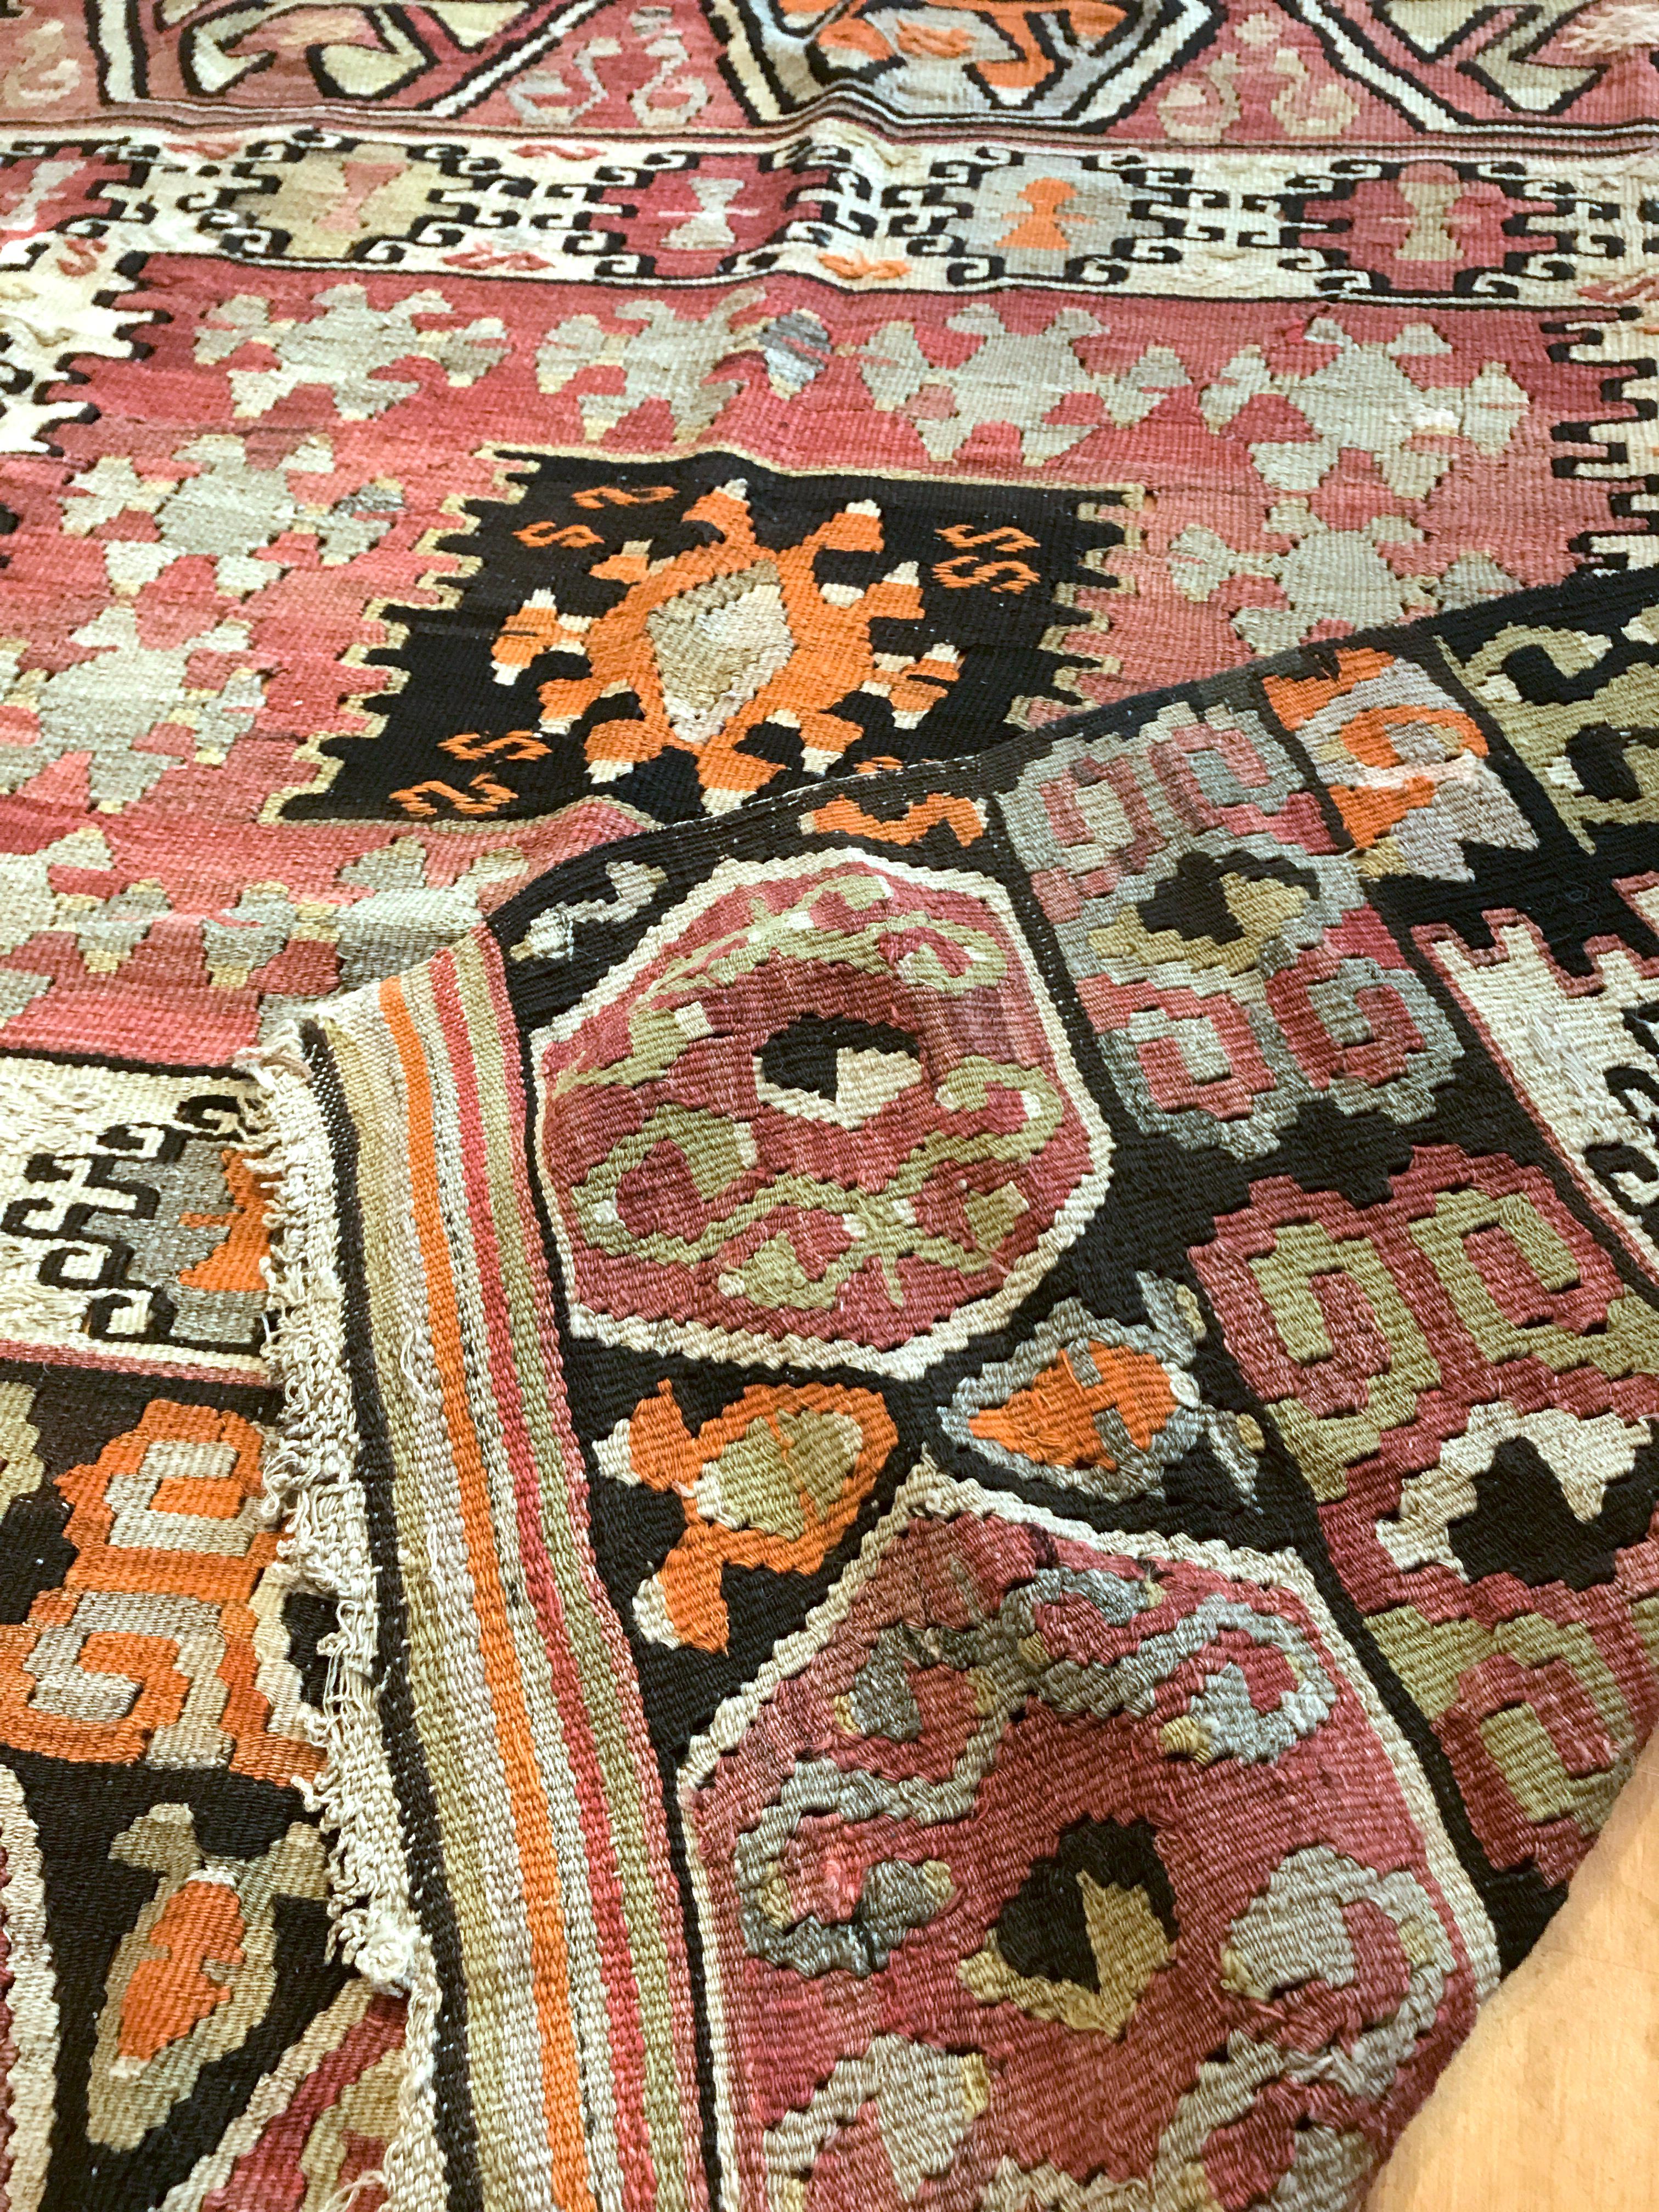 Antique Turkish Kilim rug

Measures: 5'8